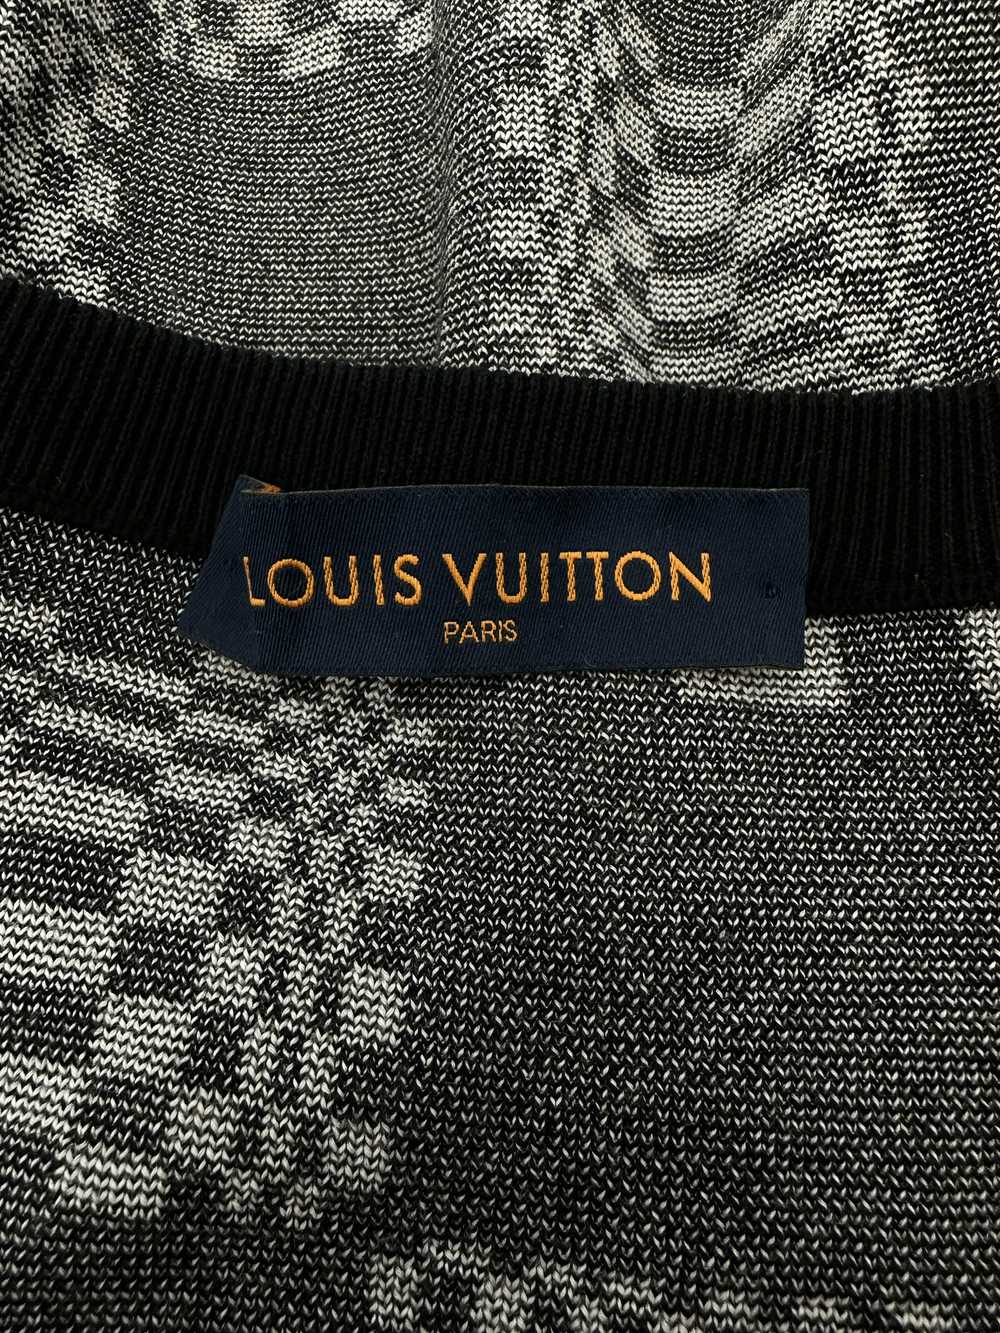 Louis Vuitton Louis Vuitton Black & White Distort… - image 3